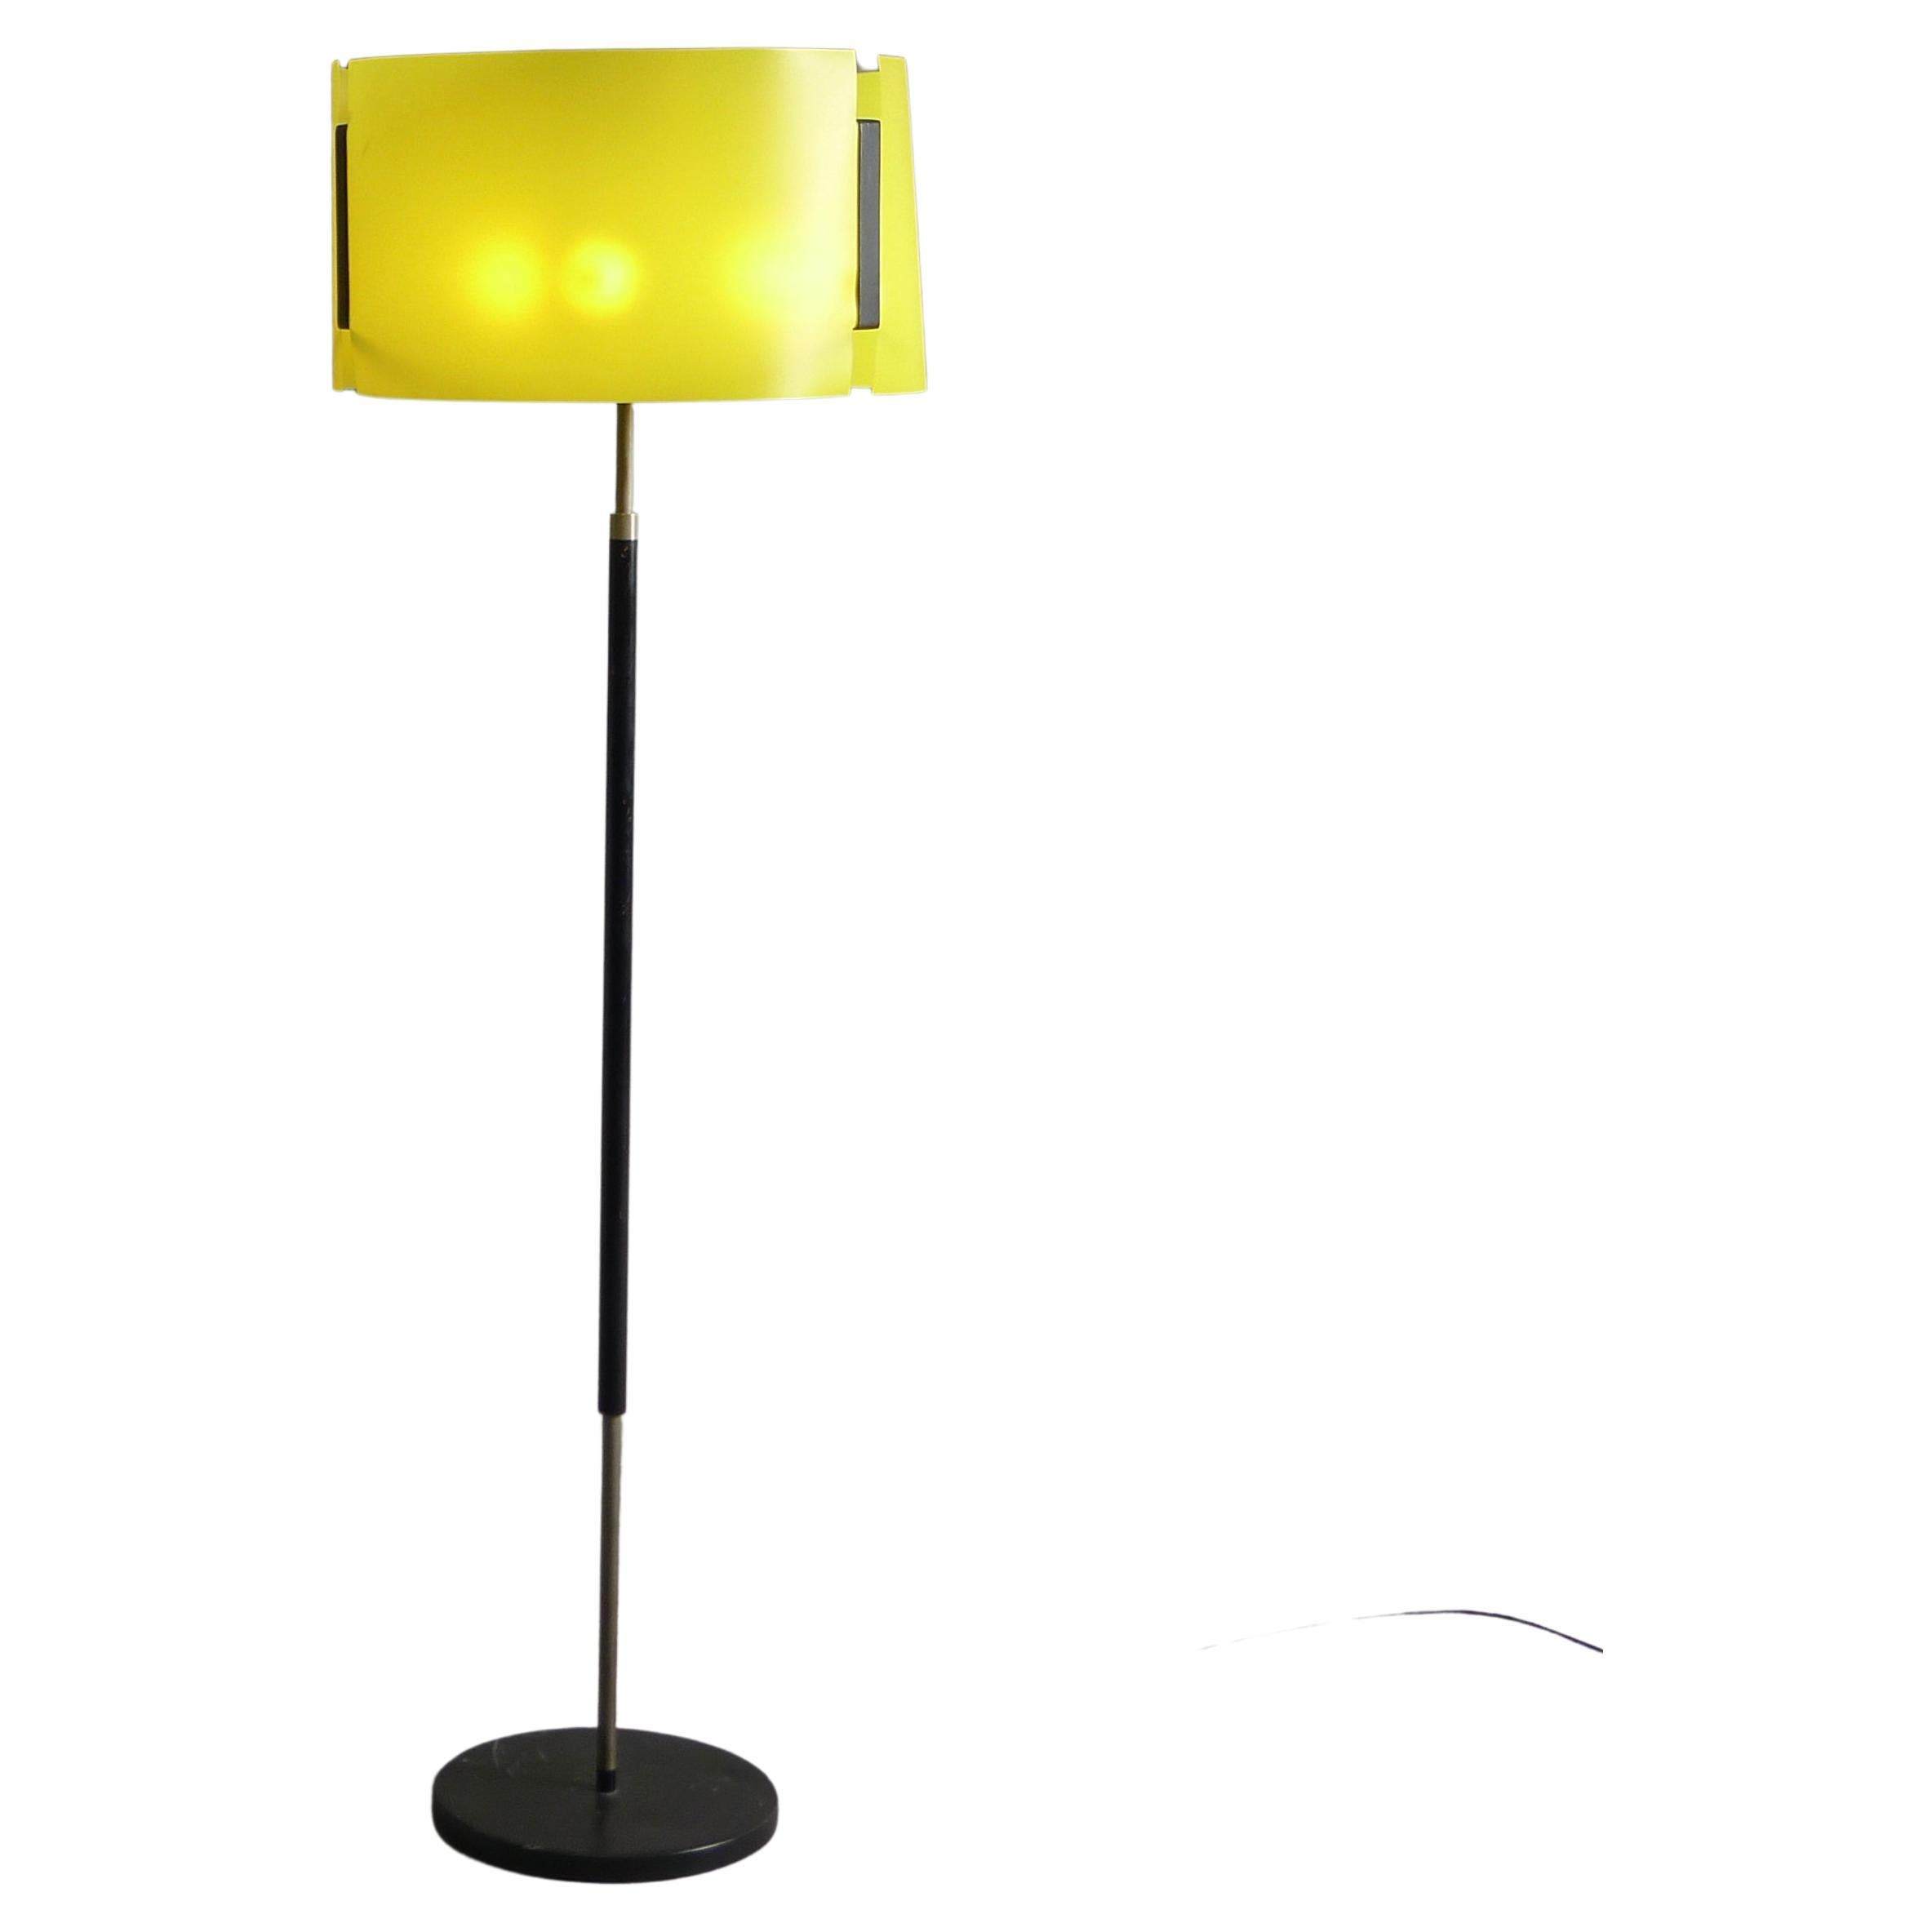 Giuseppe Ostuni for Oluce, Italy, circa 1960's Adjustable Floor Lamp For Sale